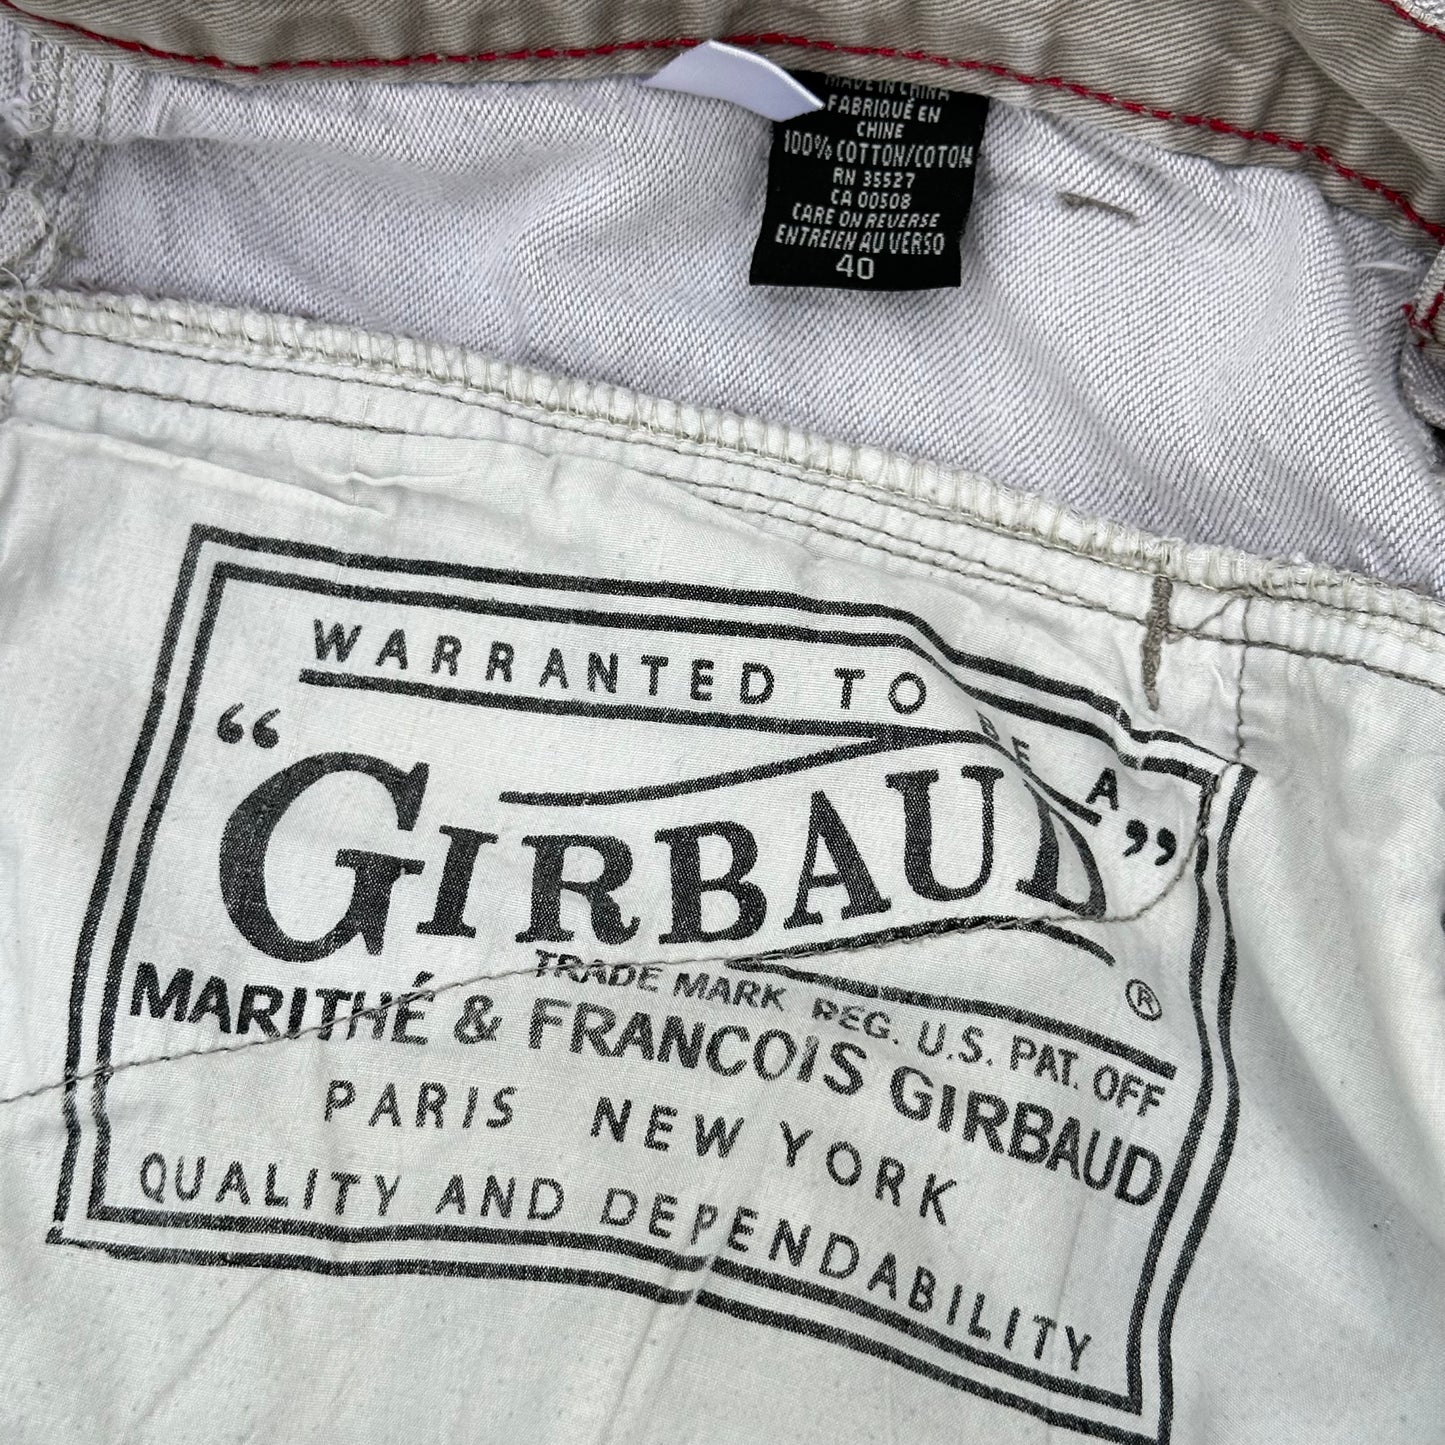 Vintage Marithe Francois Girbaud Jean Shorts Size 40 Jorts